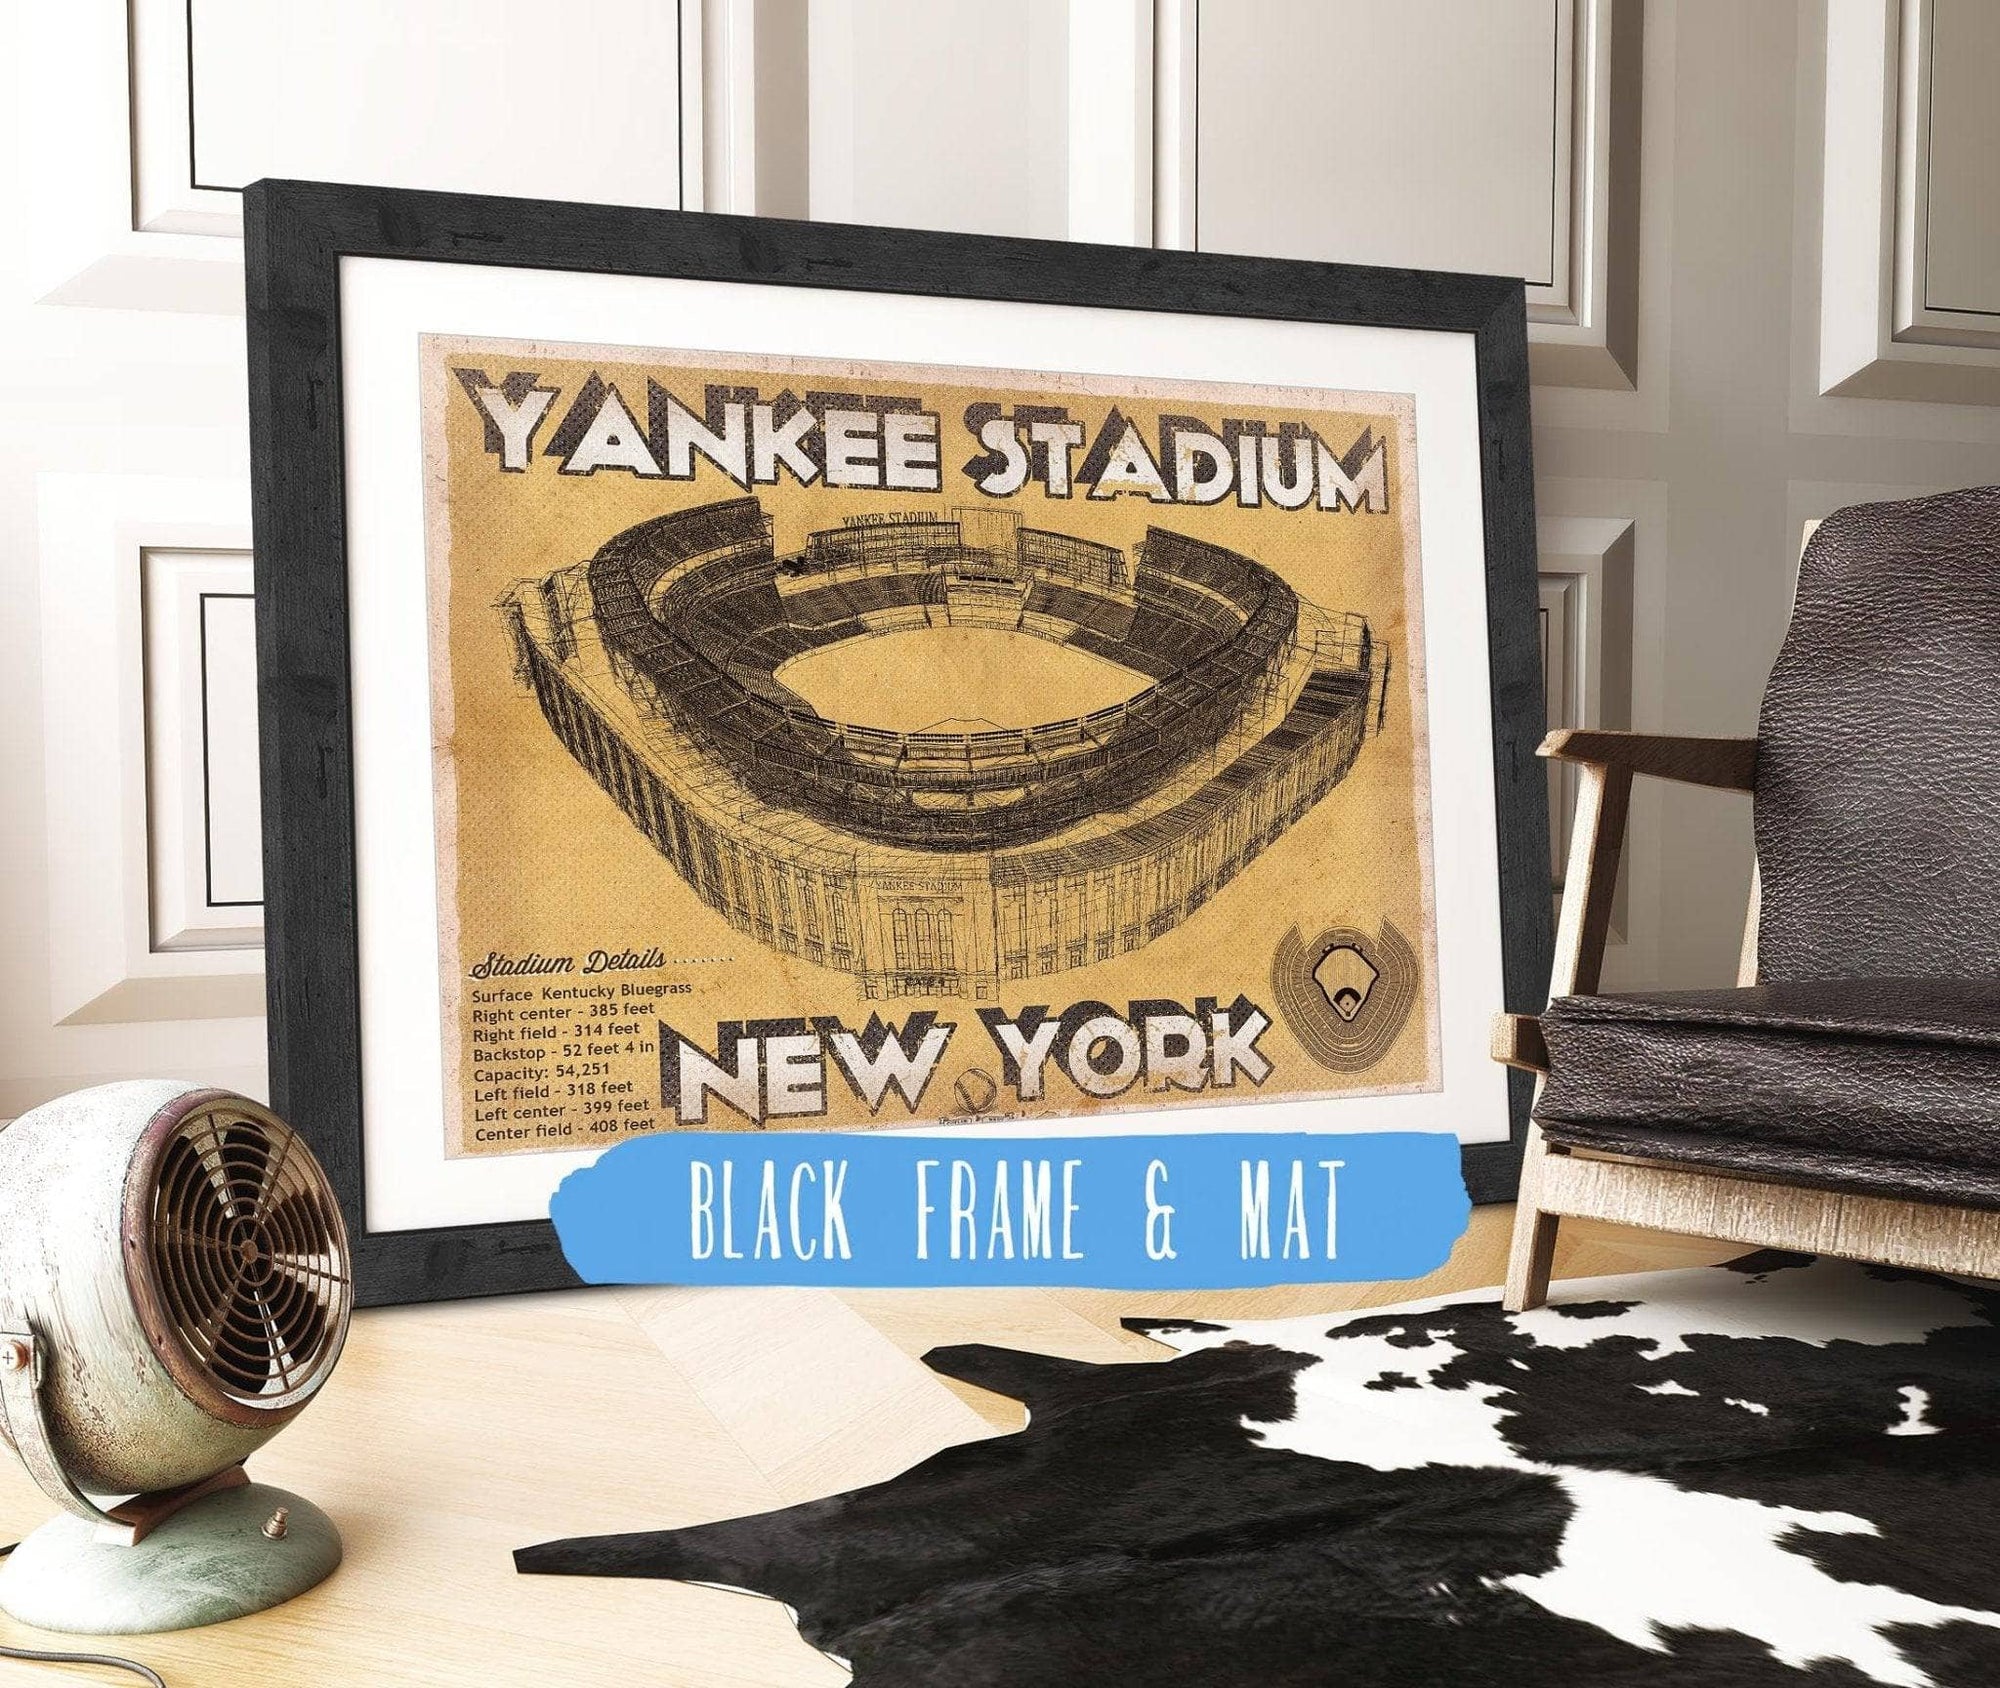 Cutler West Baseball Collection 14" x 11" / Black Frame & Mat NY Yankees - Vintage Yankee Stadium Blueprint Baseball Print 715530501